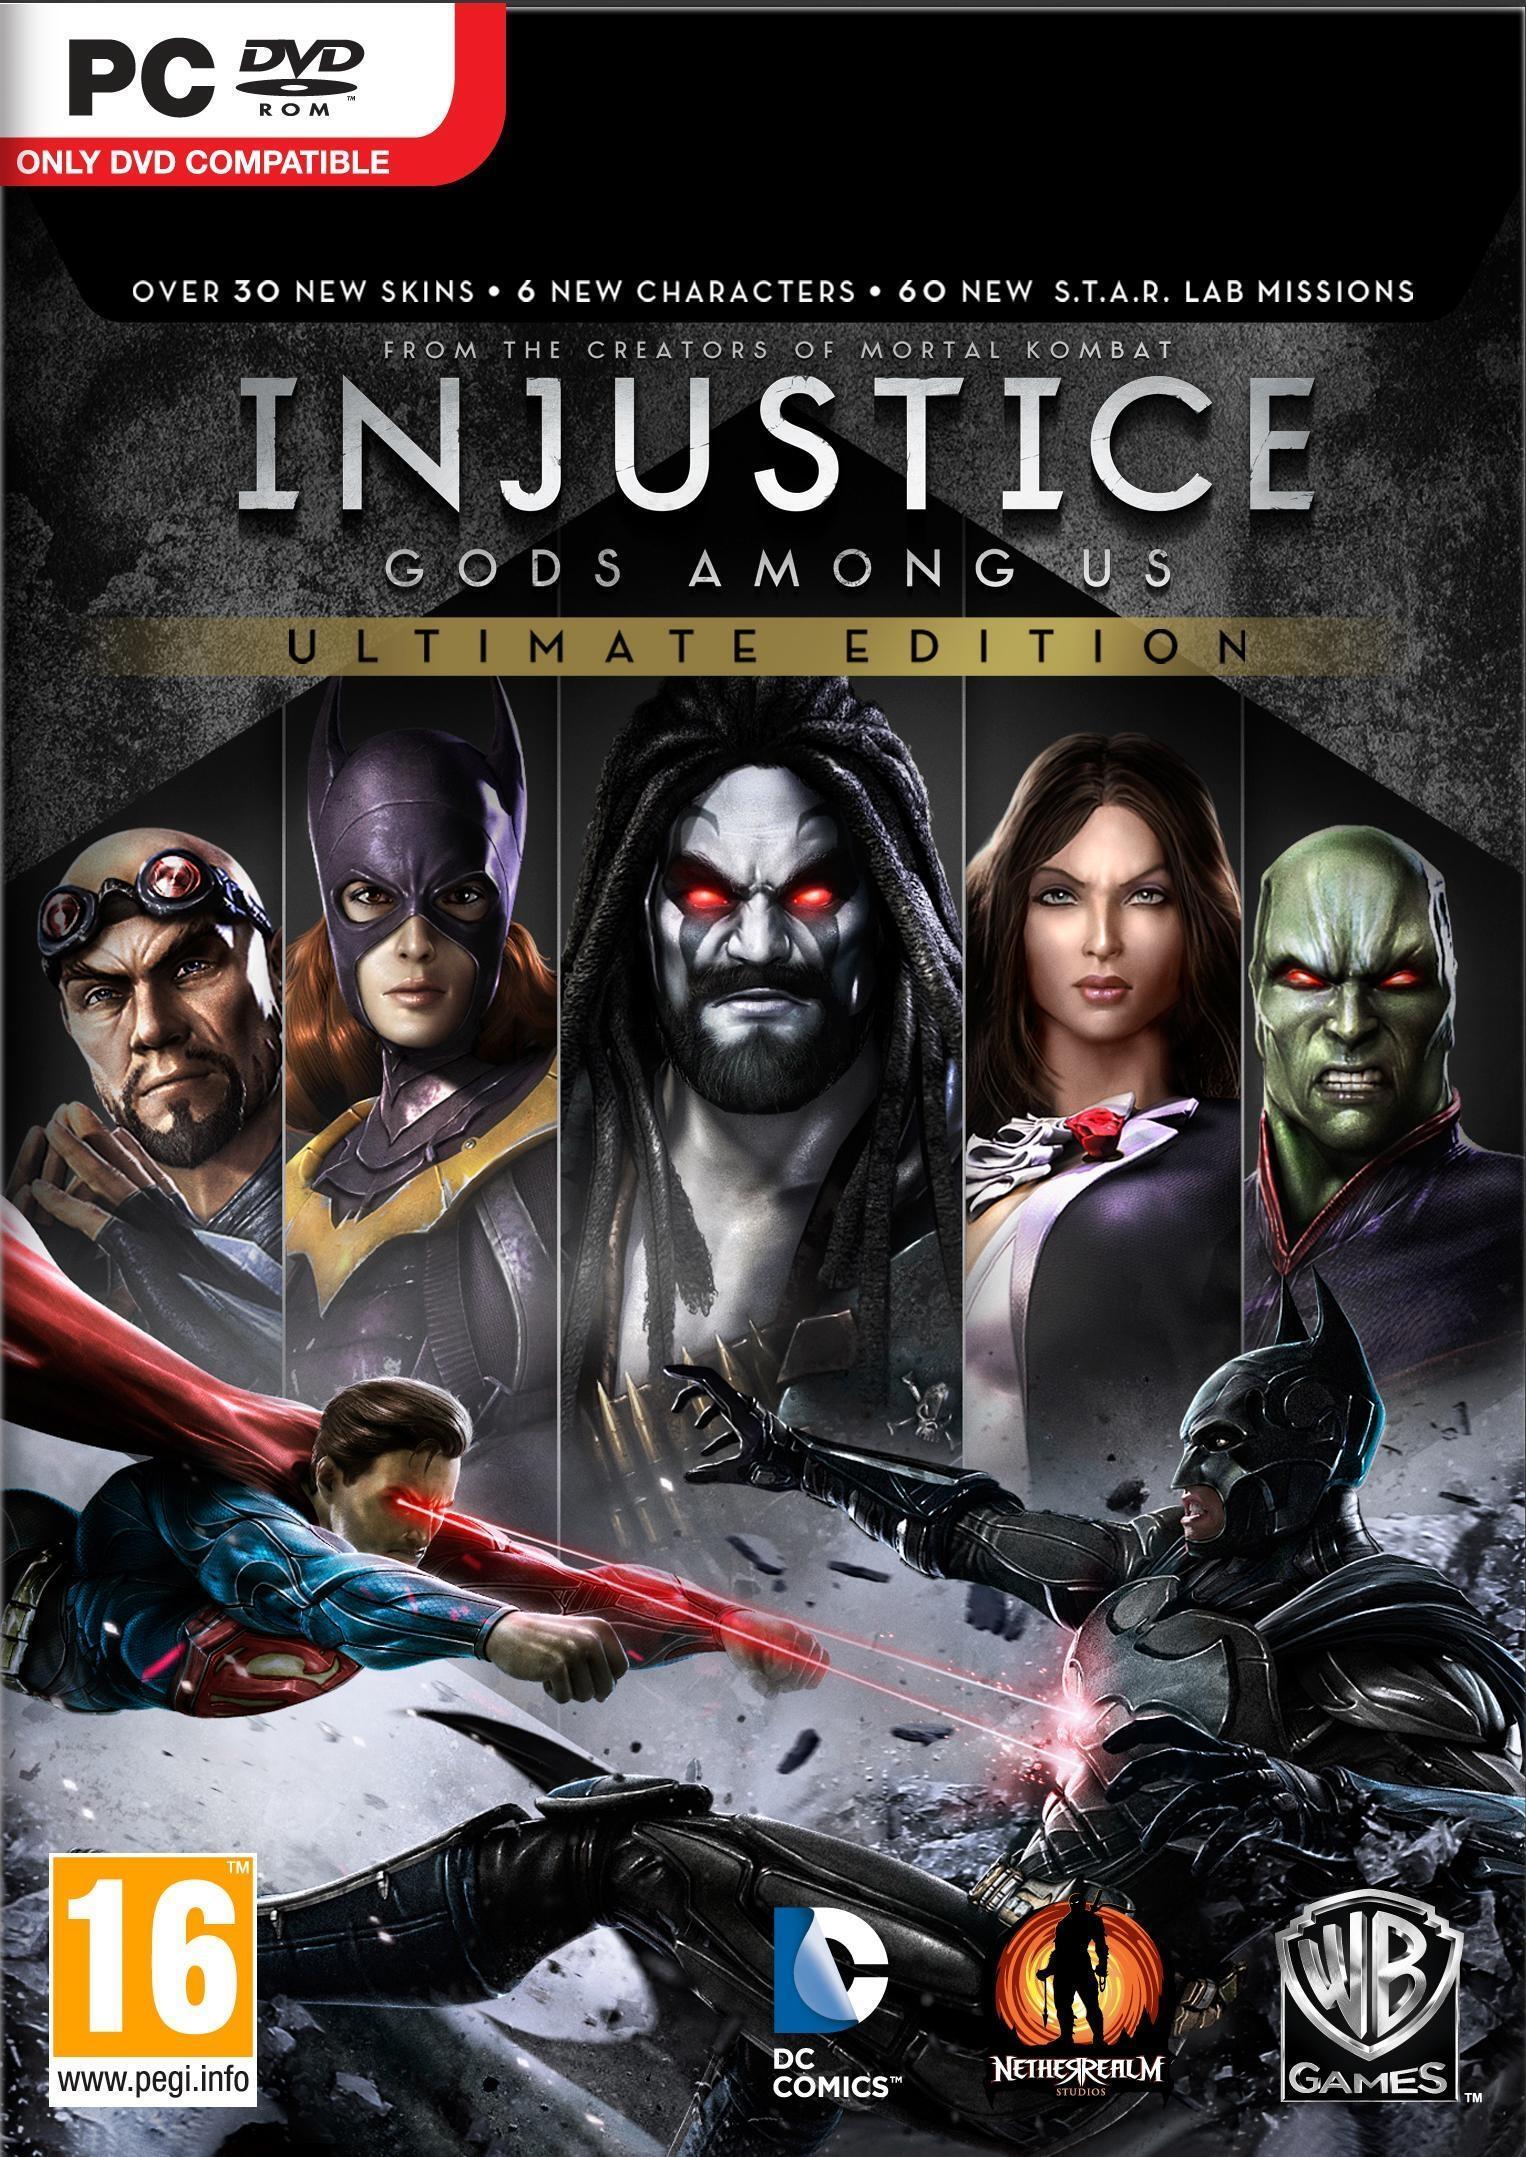 Warner Bros. Interactive Injustice (GOTY Edition PC